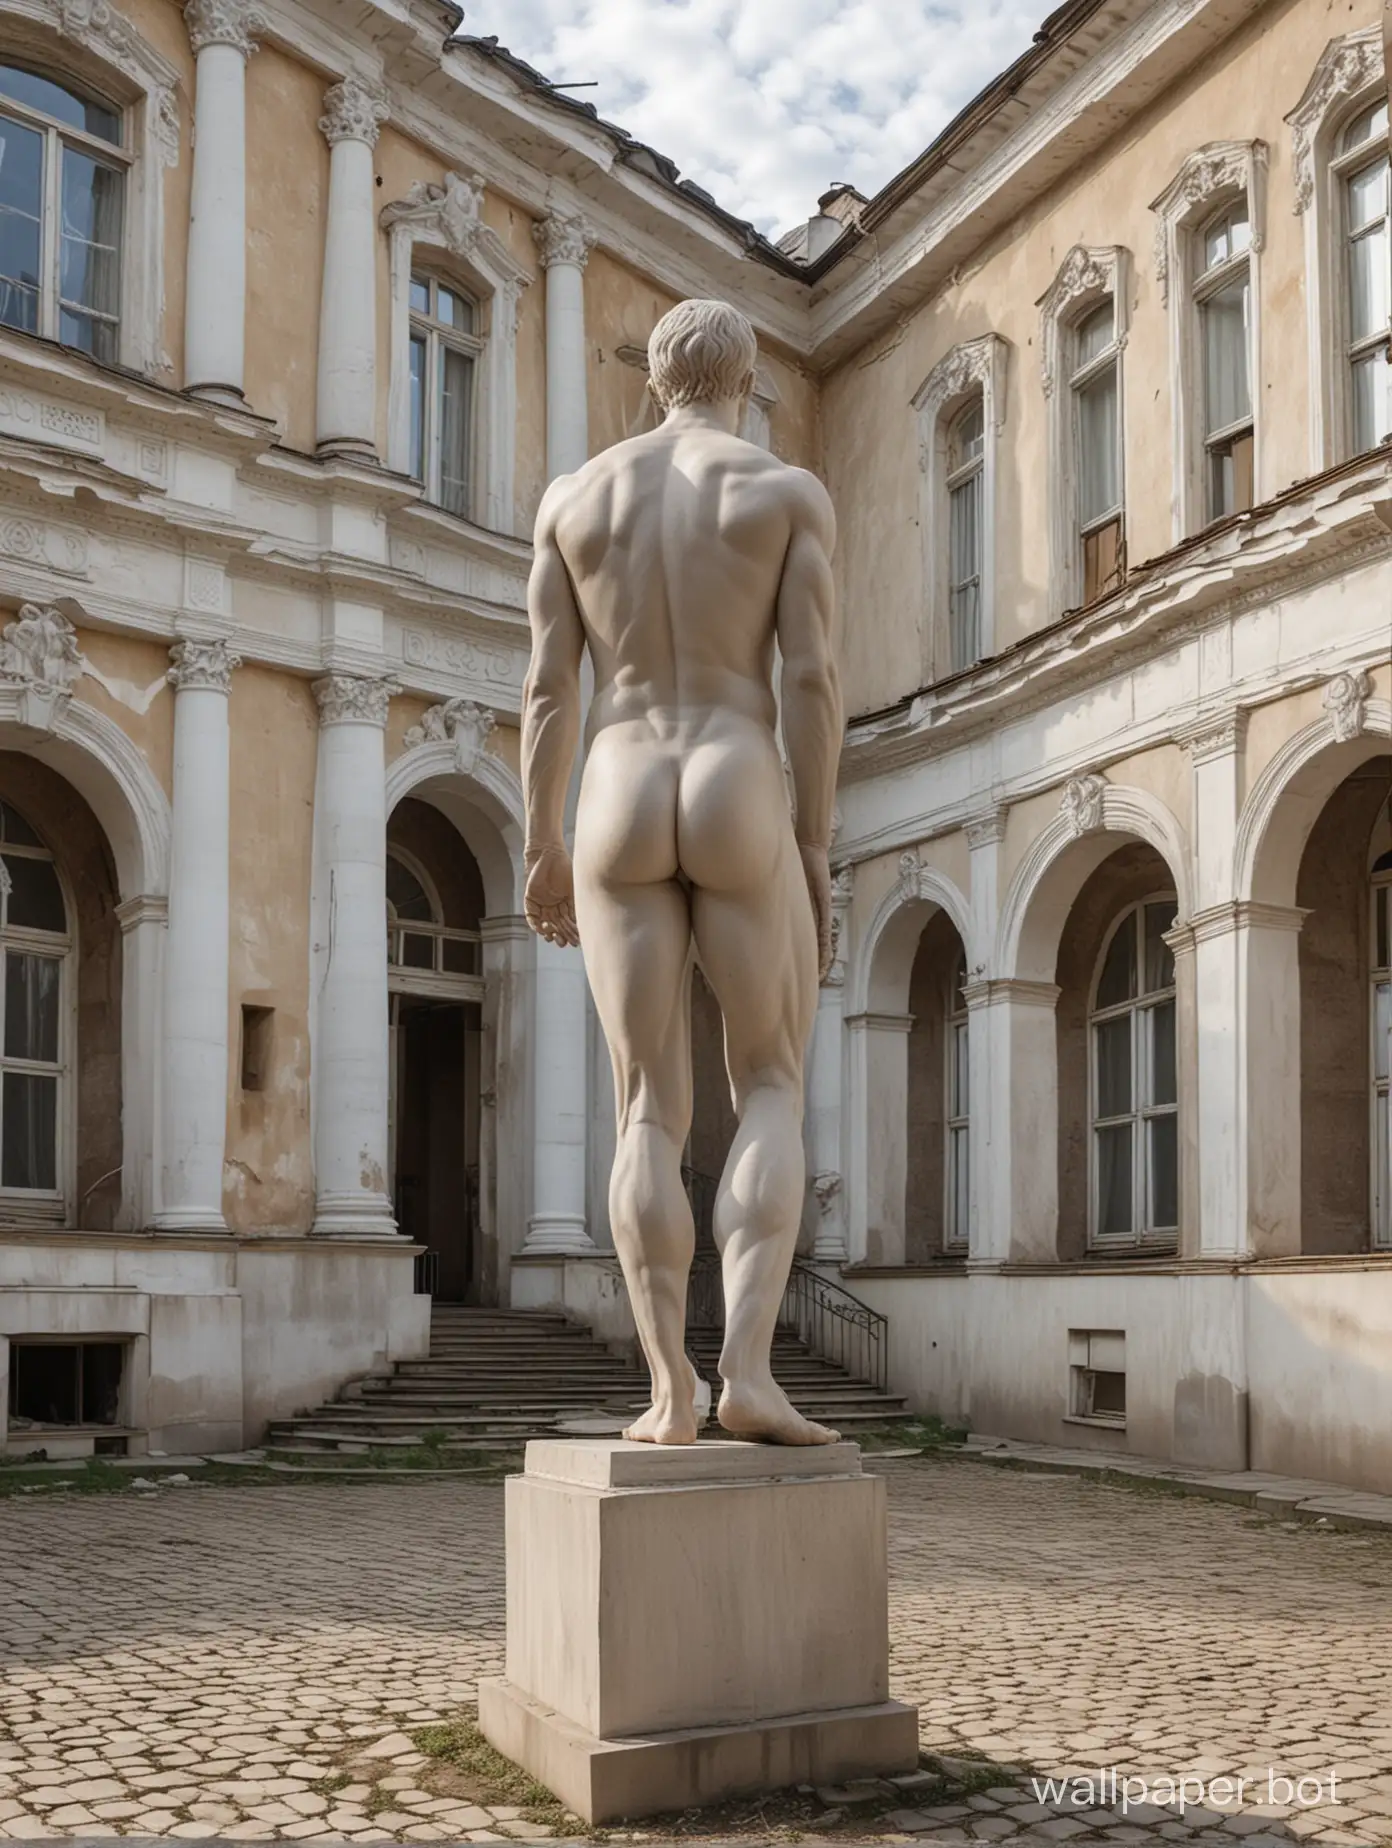 Athletic-Nude-Male-Statue-in-Russian-School-Courtyard